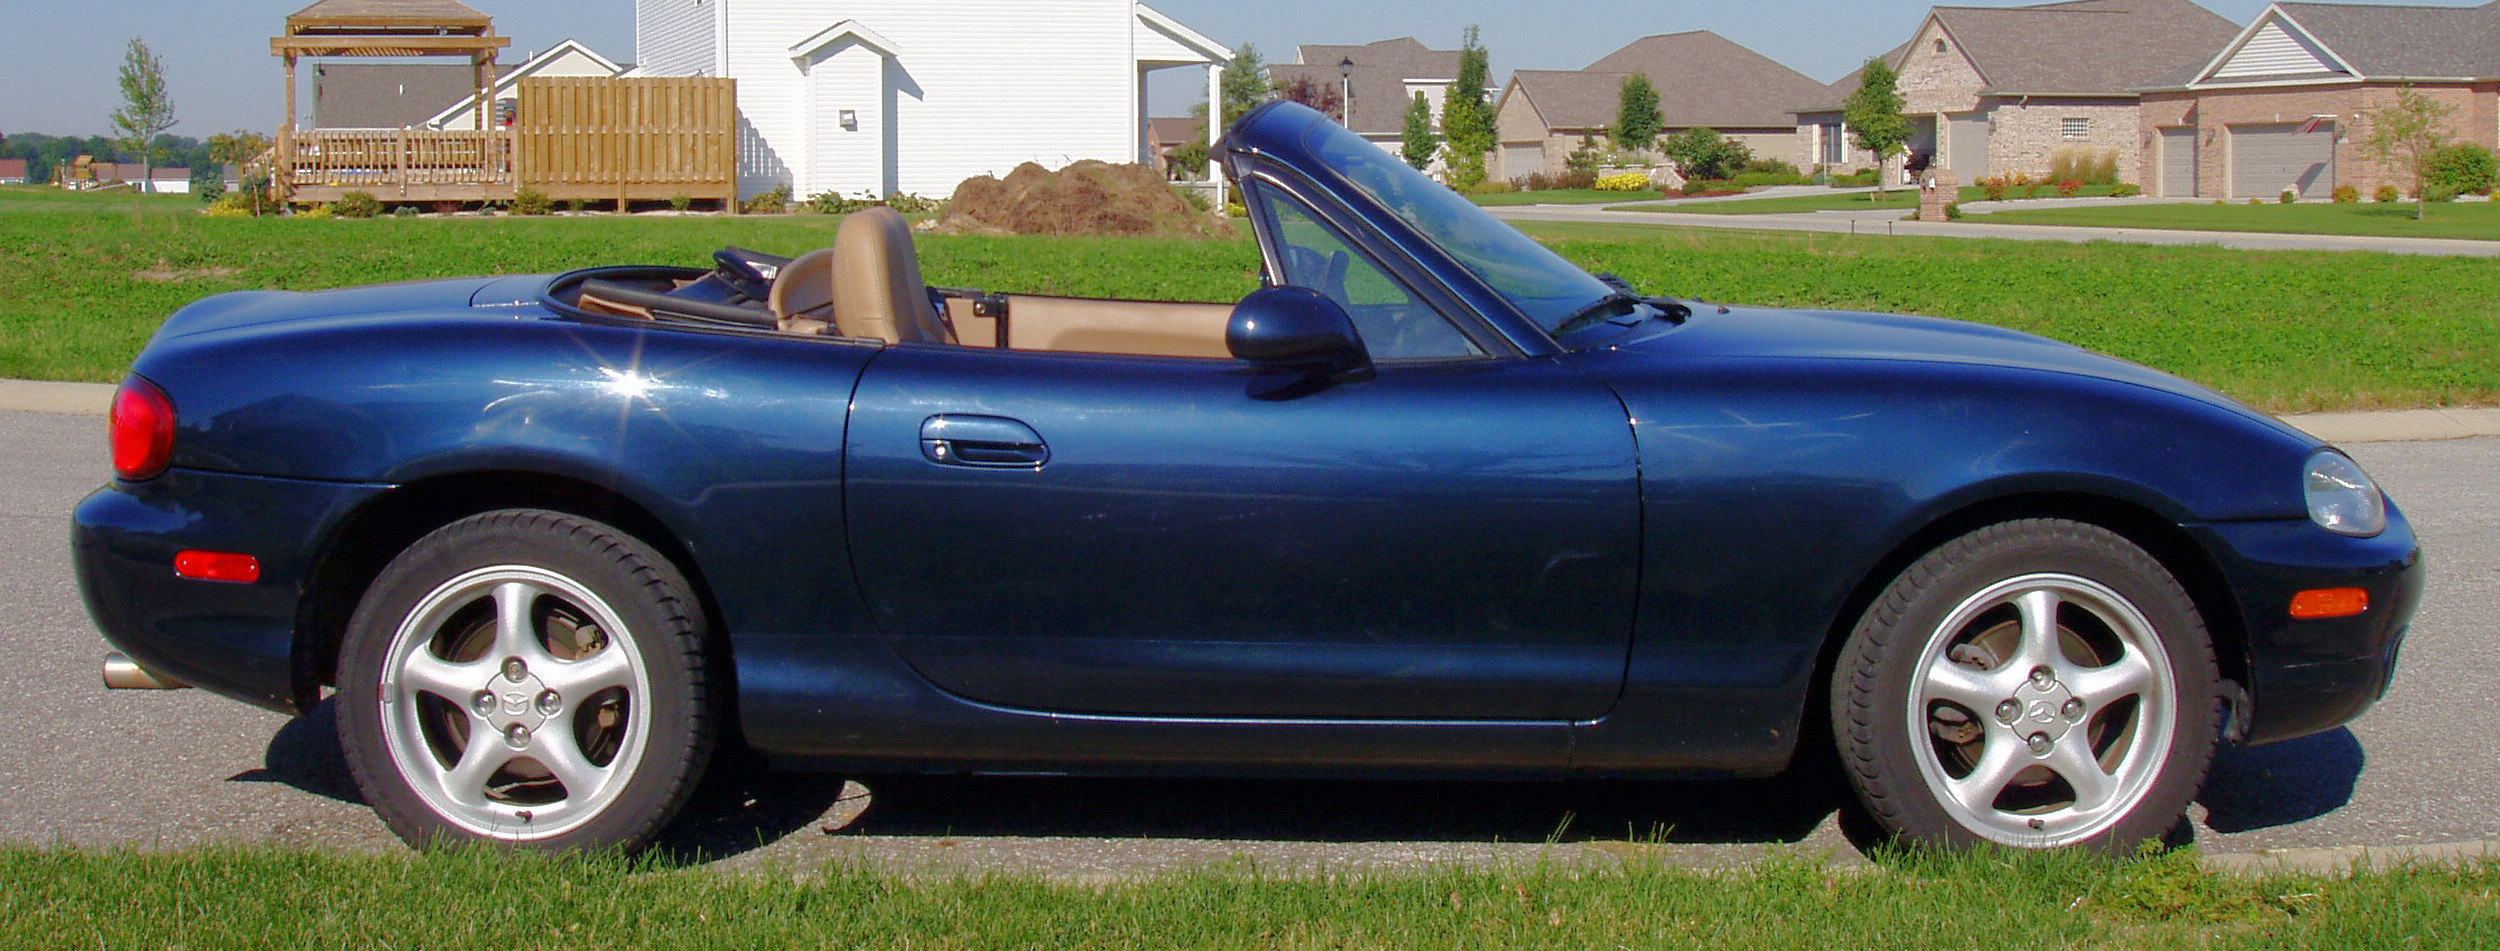 File:Mazda-miata-1999-blue-side.jpg